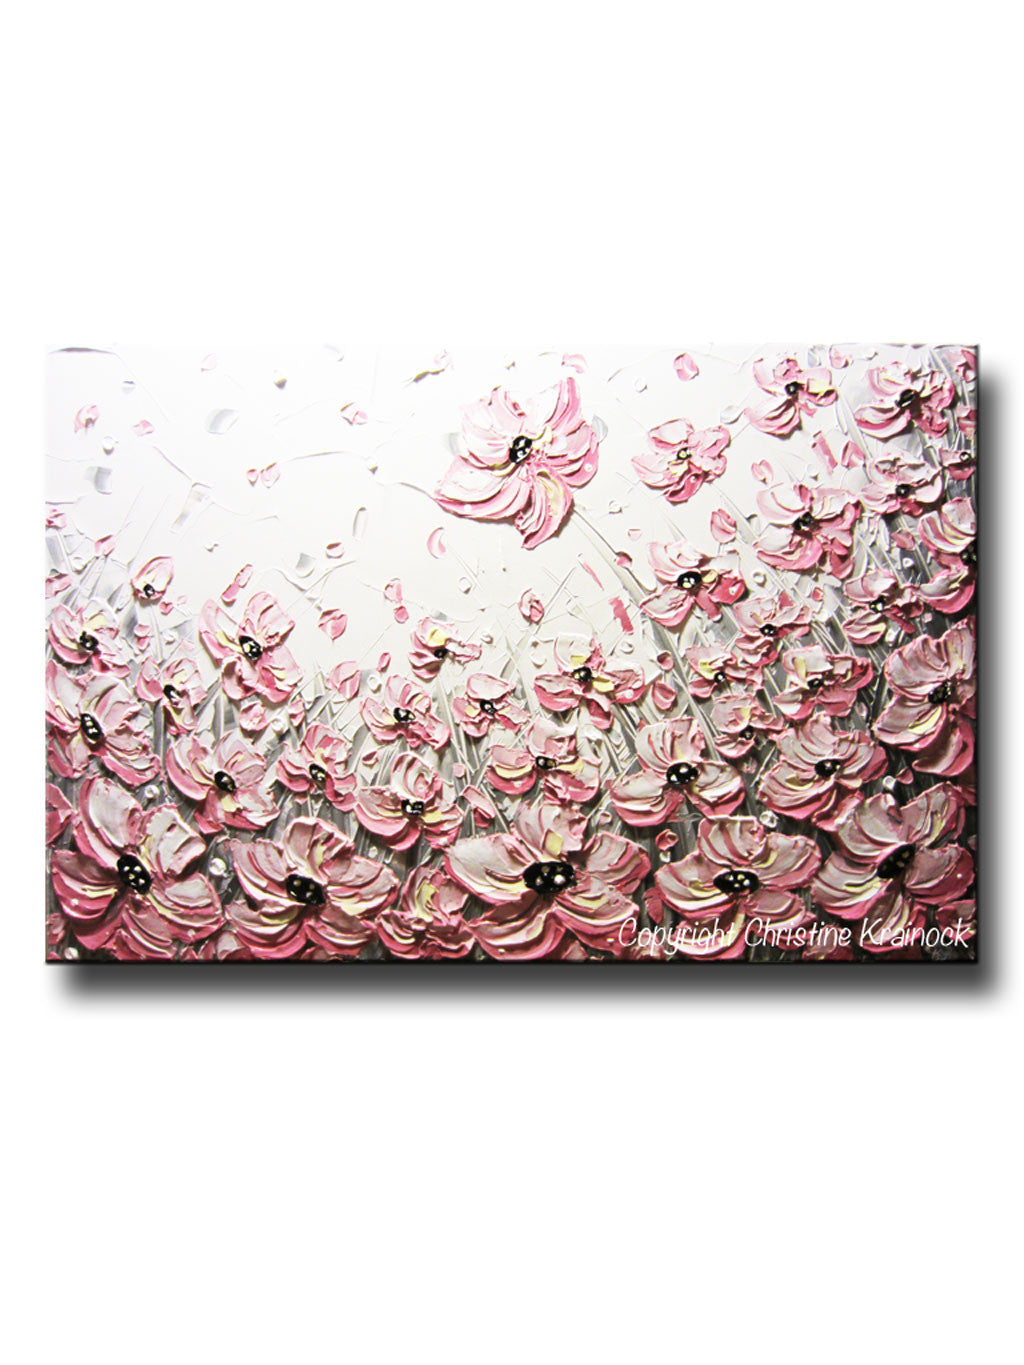 CUSTOM Art Abstract Painting Pink Poppies White Flowers Grey Textured Poppy Palette Knife - Christine Krainock Art - Contemporary Art by Christine - 1